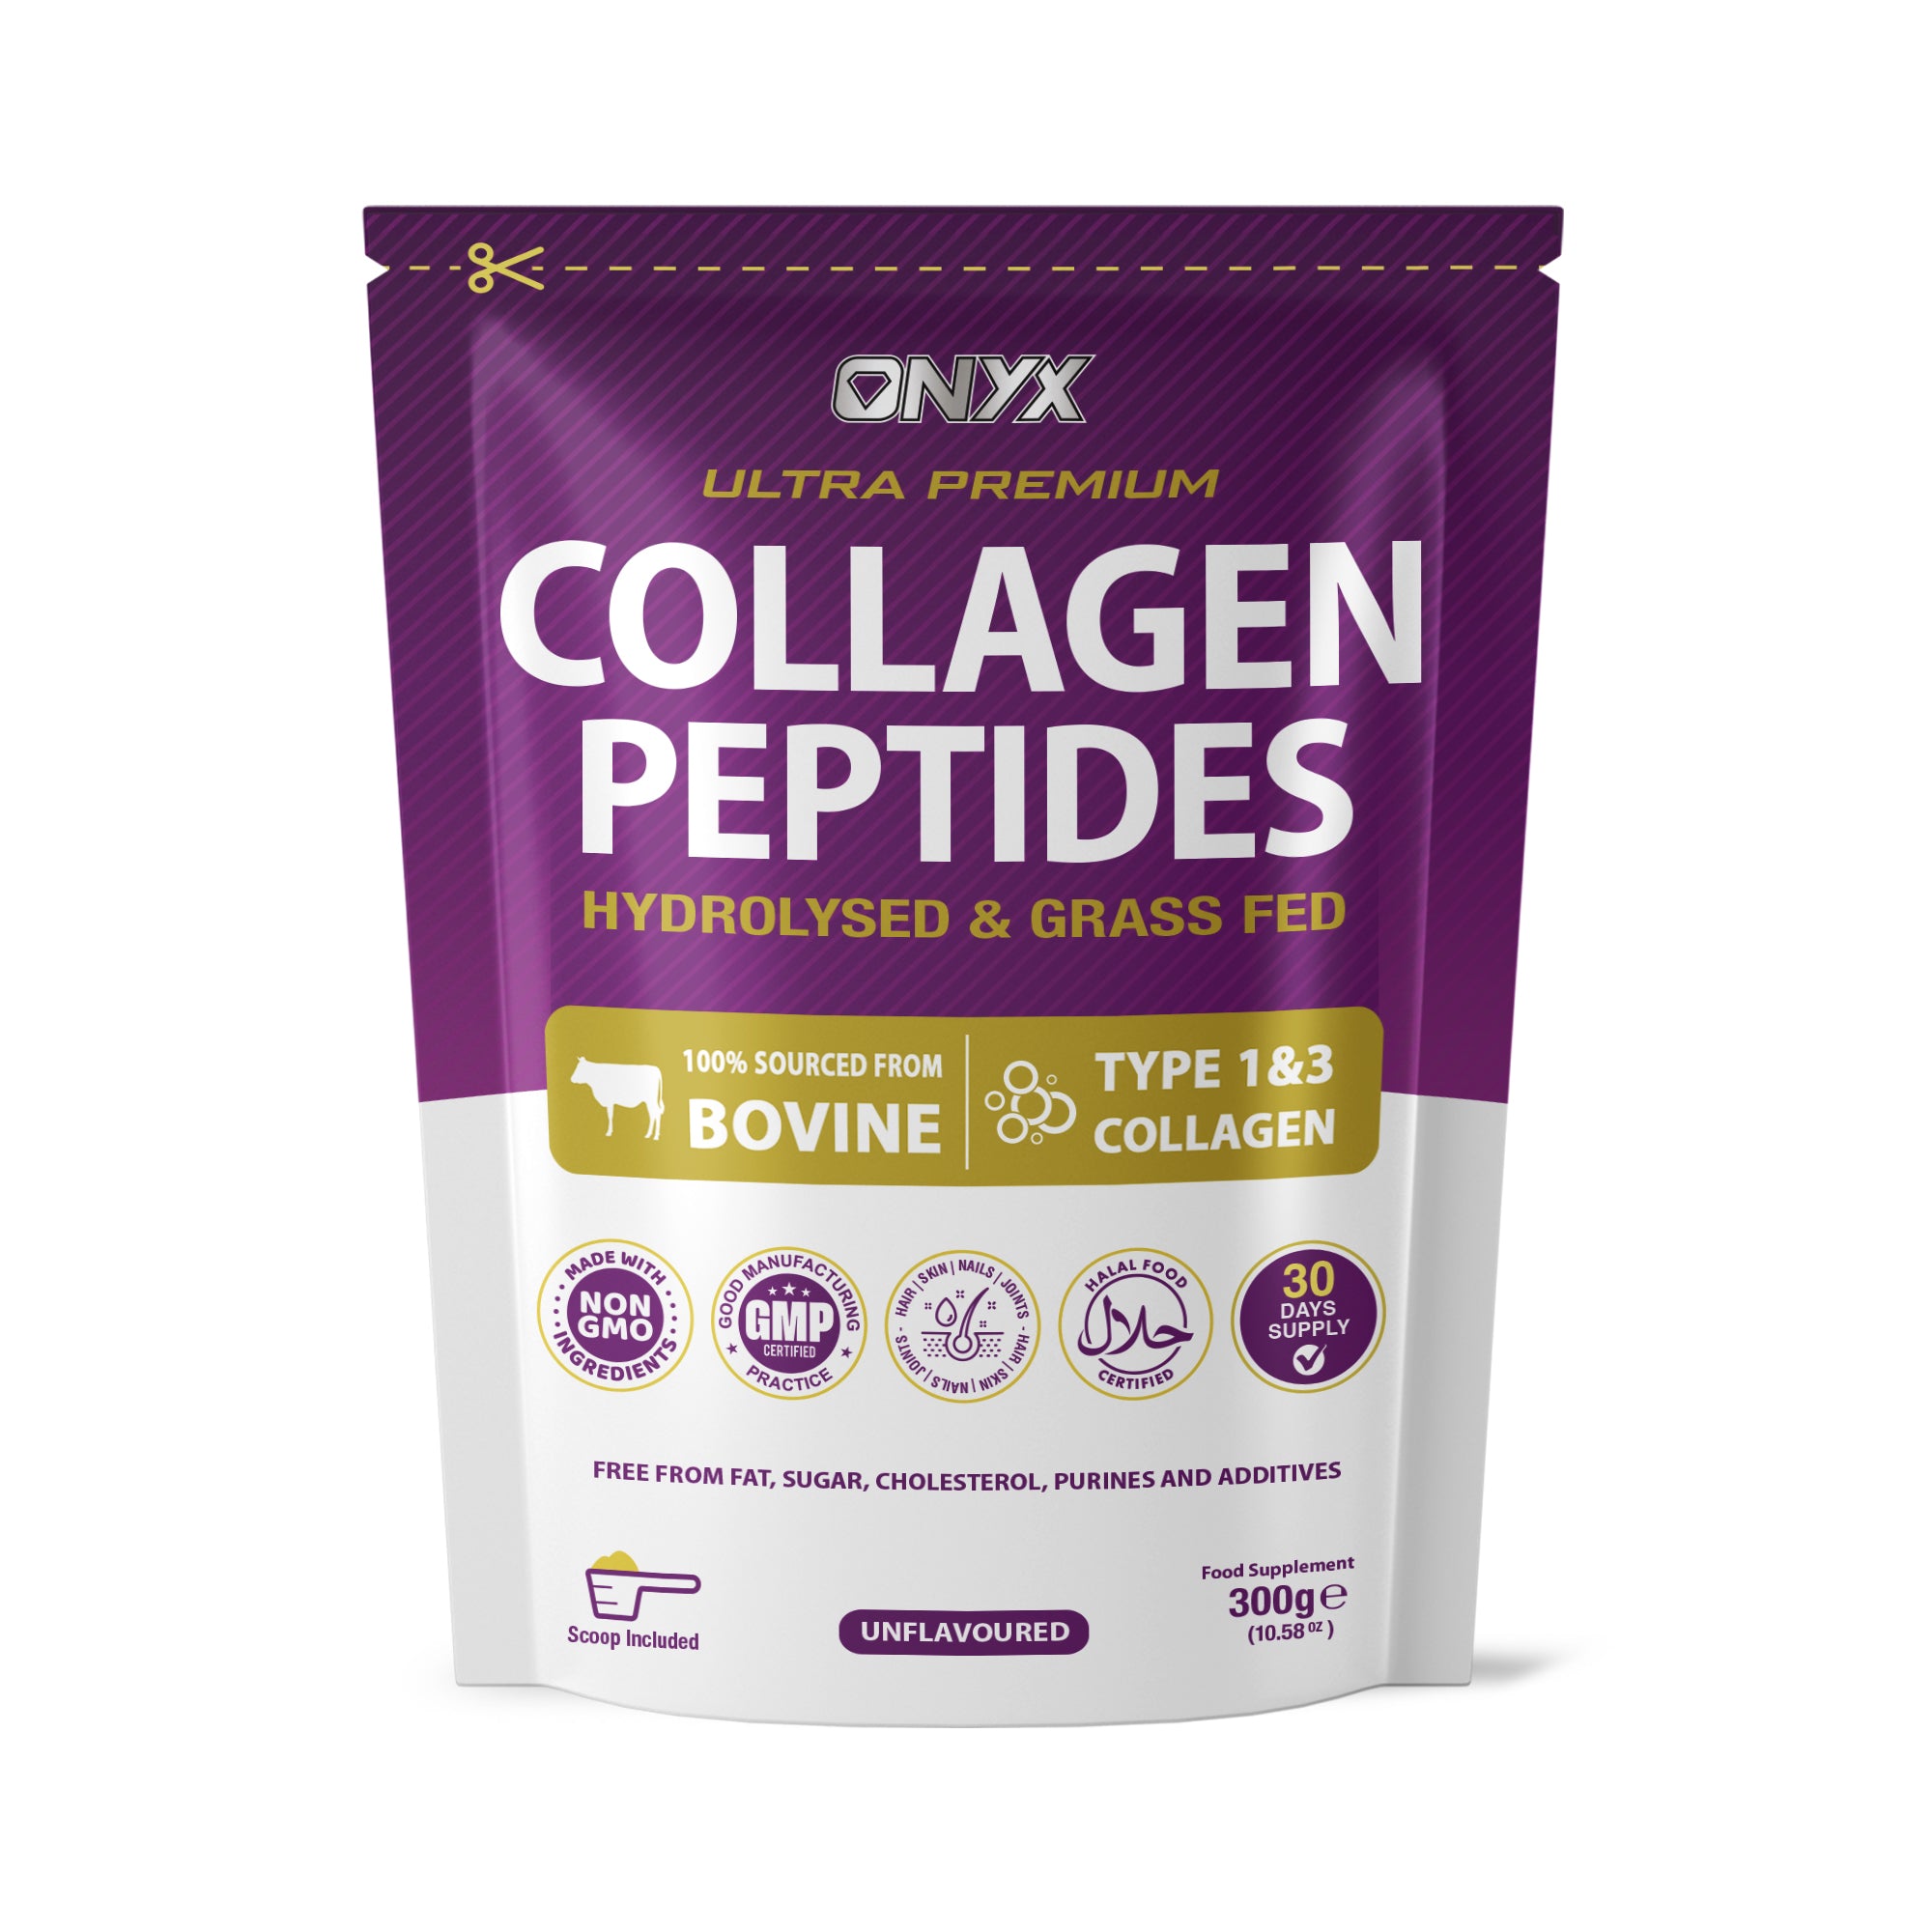 Premium Collagen Powder 10,000mg - Hydrolysed peptides & Grass Fed - Halal - Collagen Supplement For Women & Men